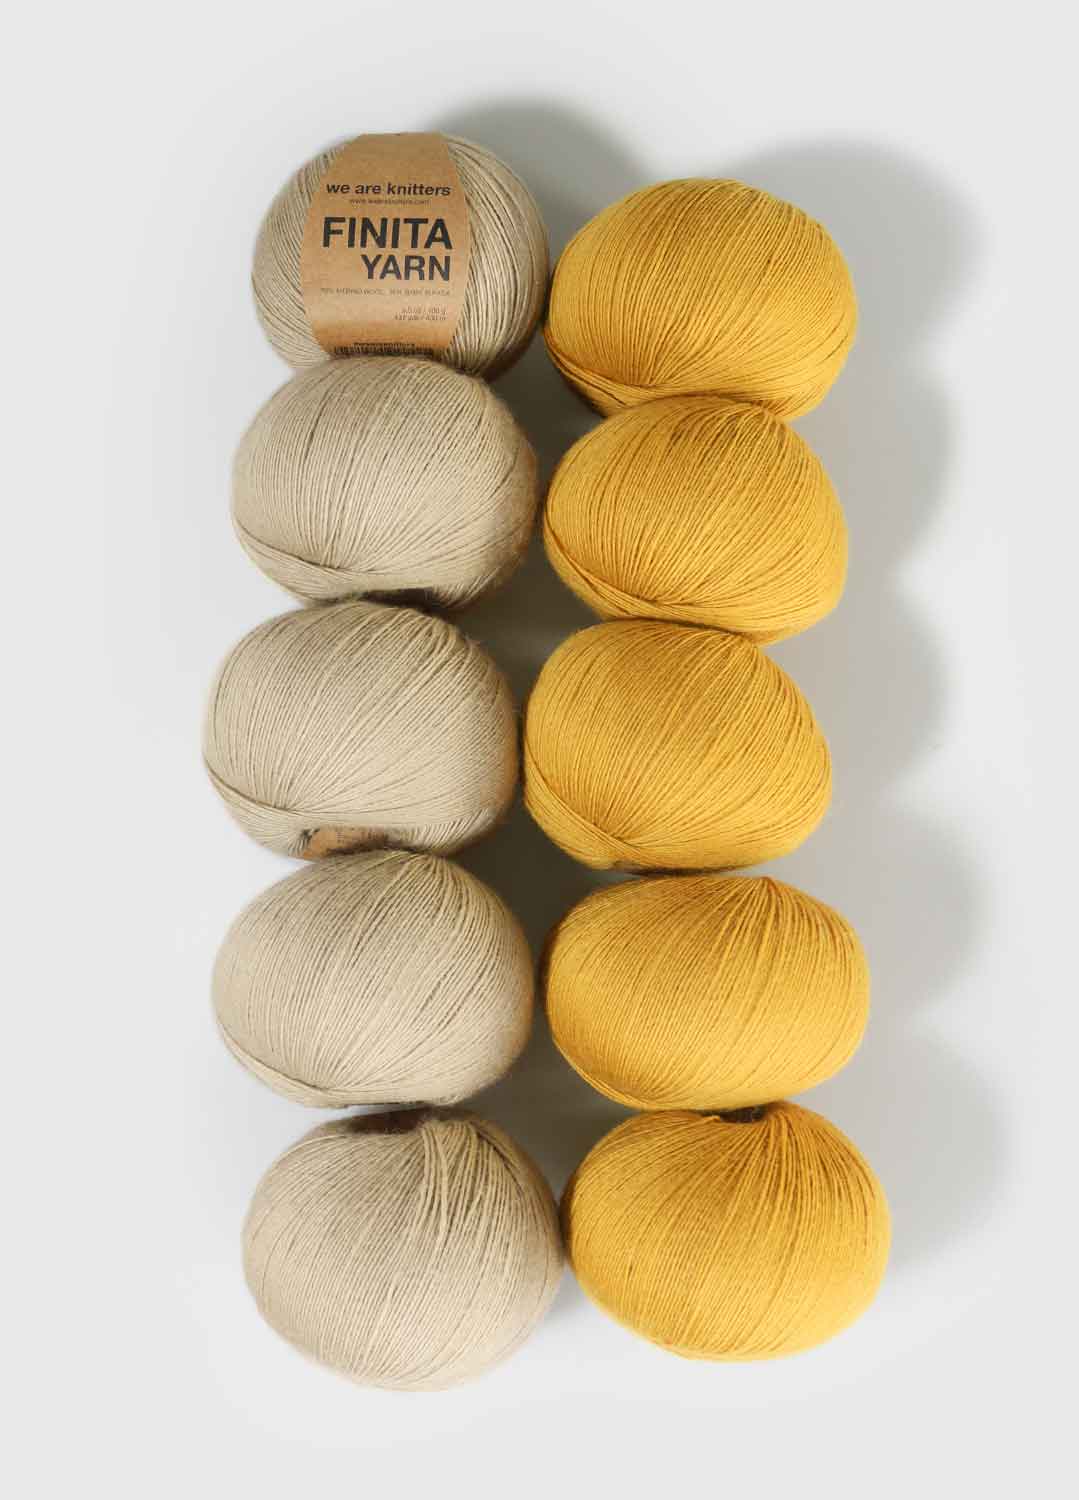 10 Pack of Finita Yarn Balls